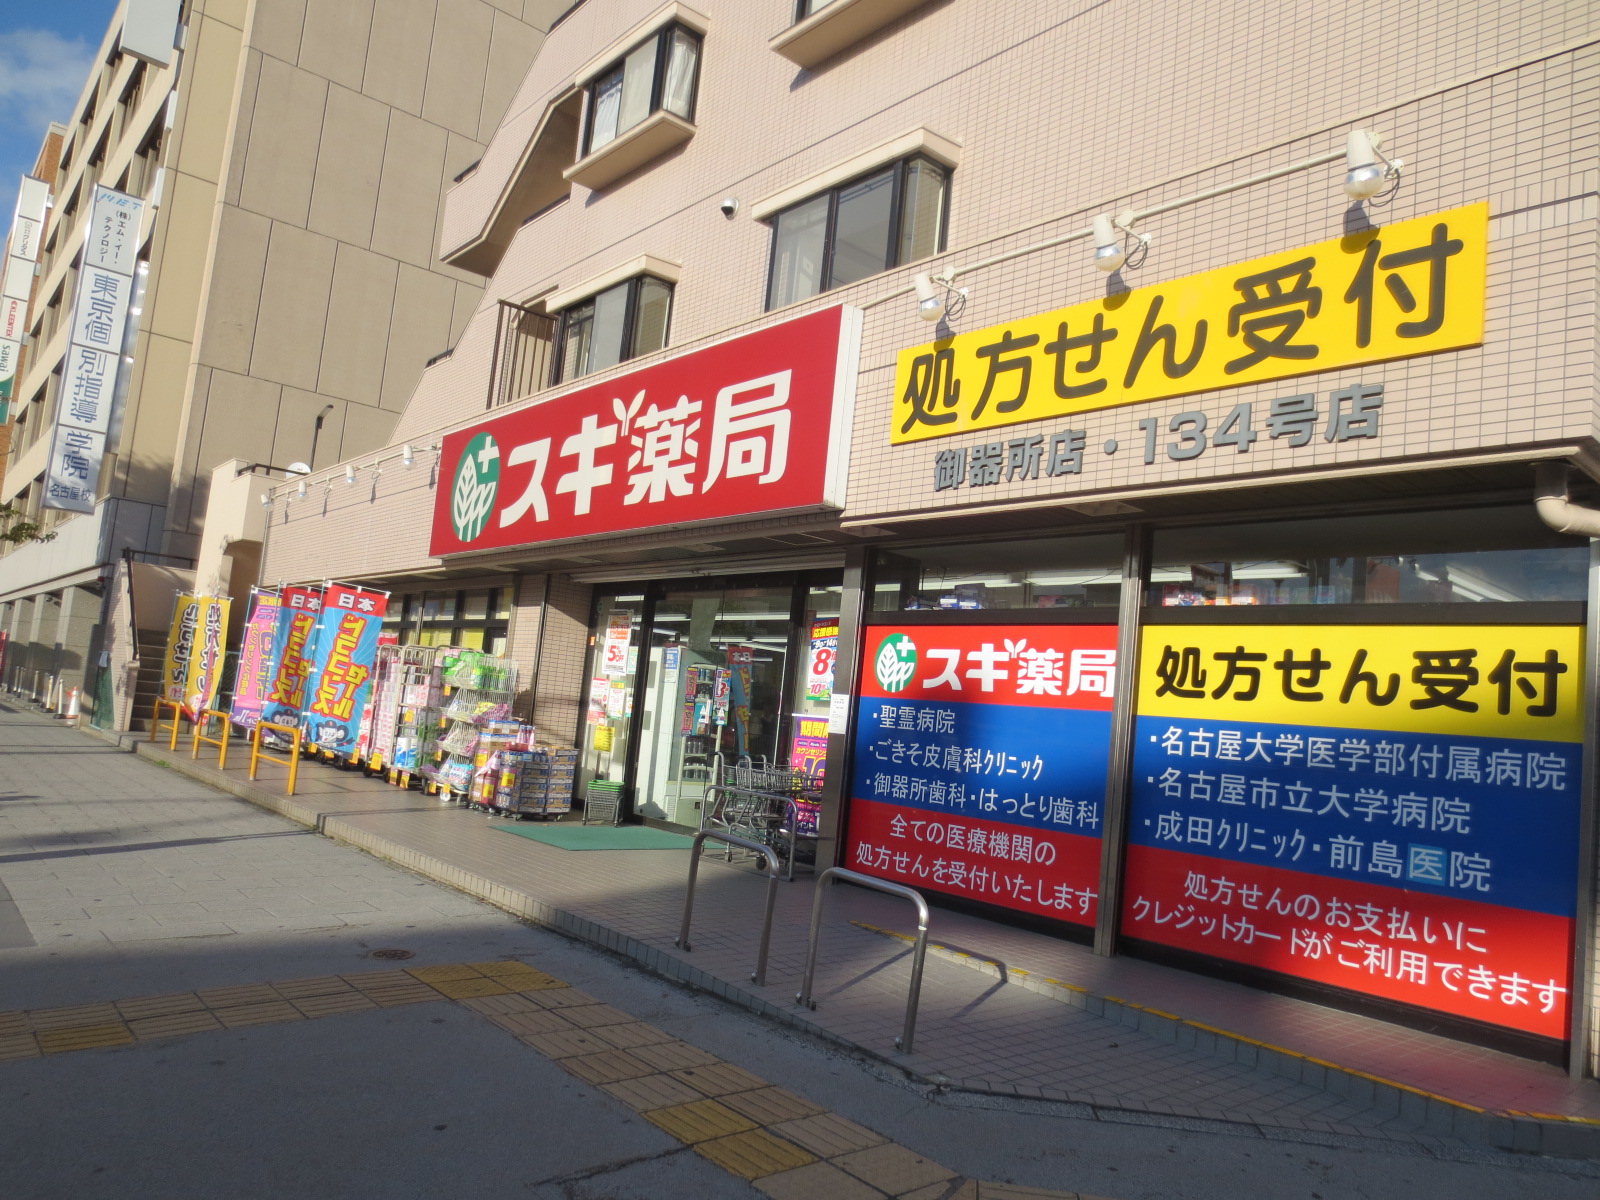 Dorakkusutoa. Cedar pharmacy Gokisho shop 427m until (drugstore)